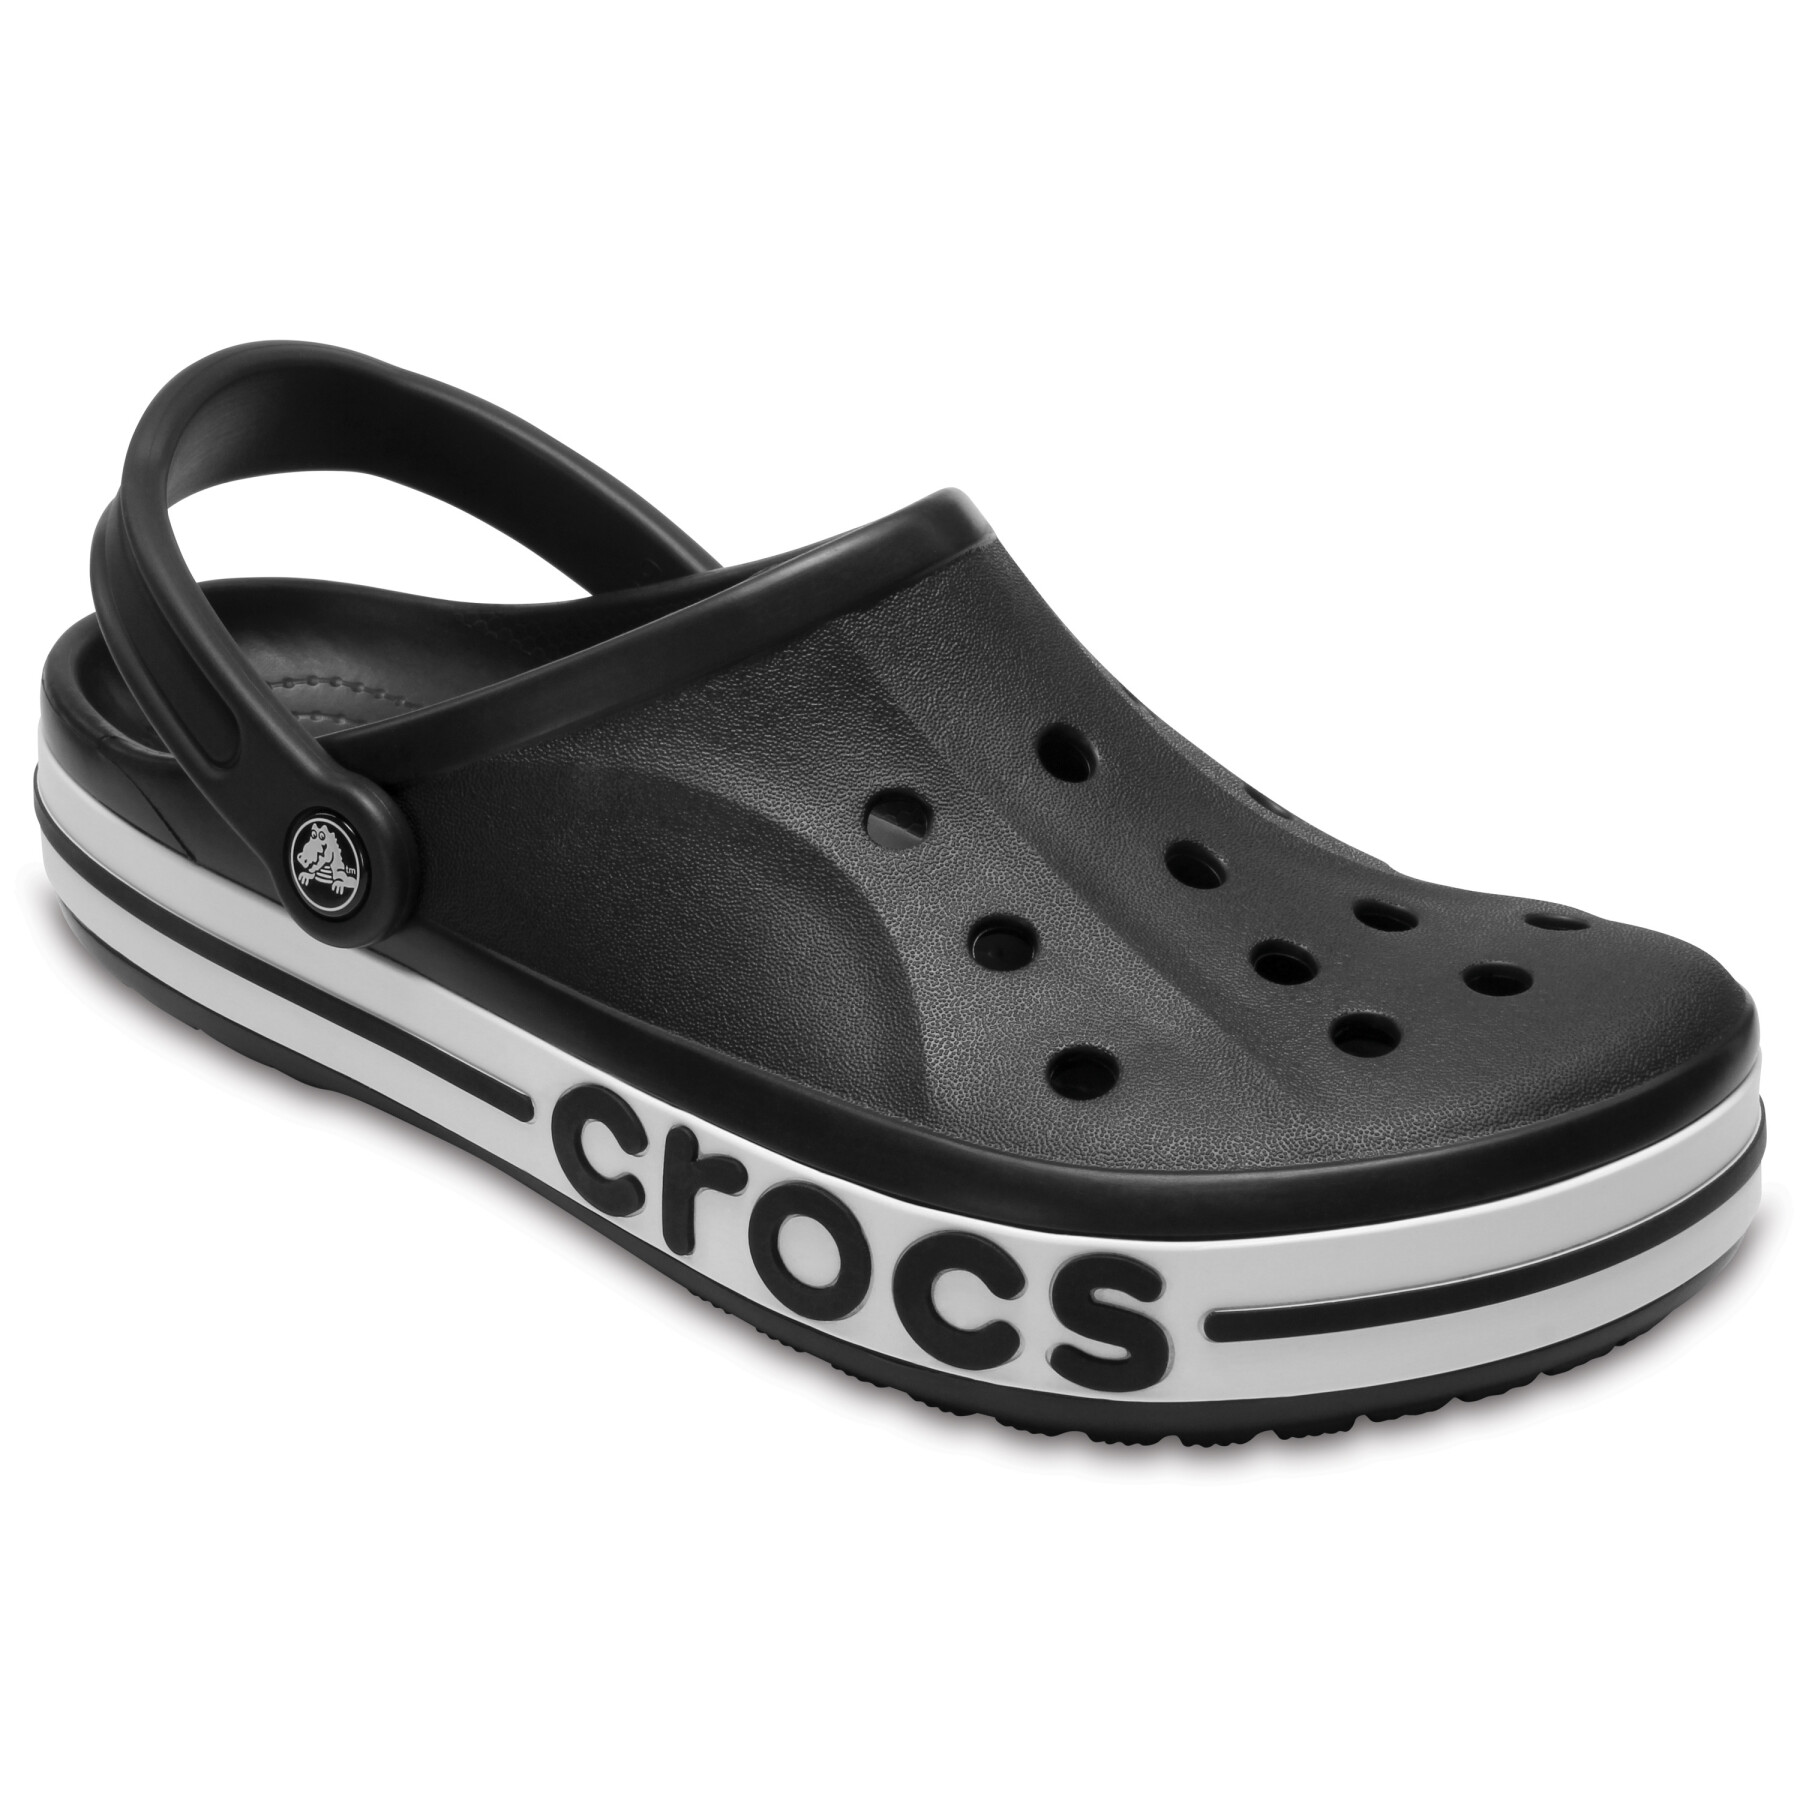 Crocs bayaband clog